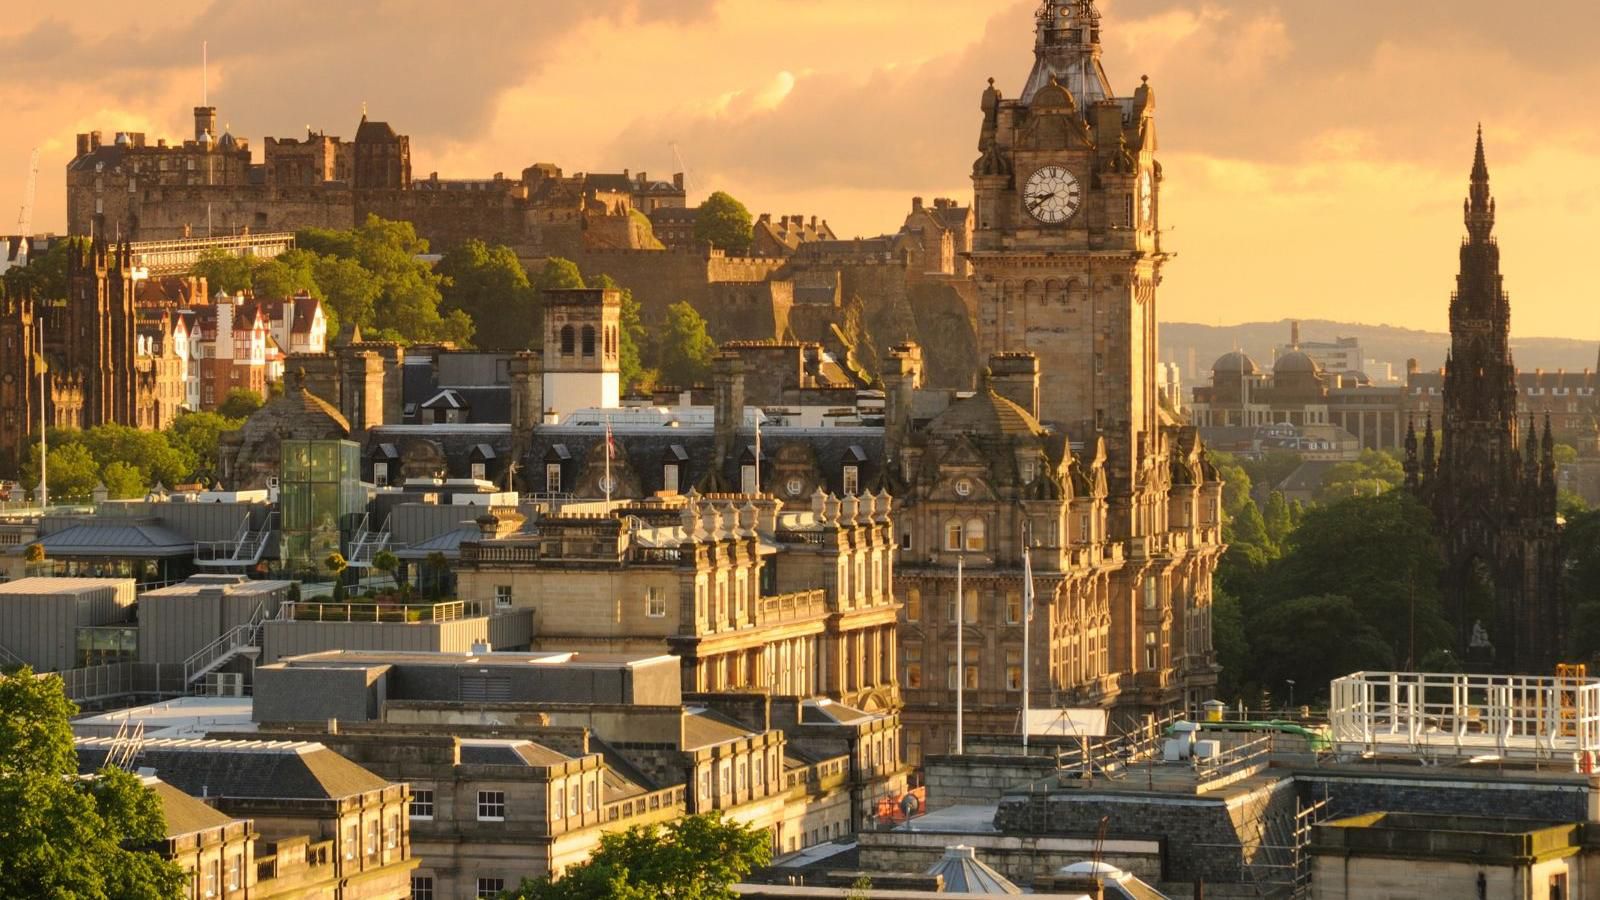 Edinburgh City by day